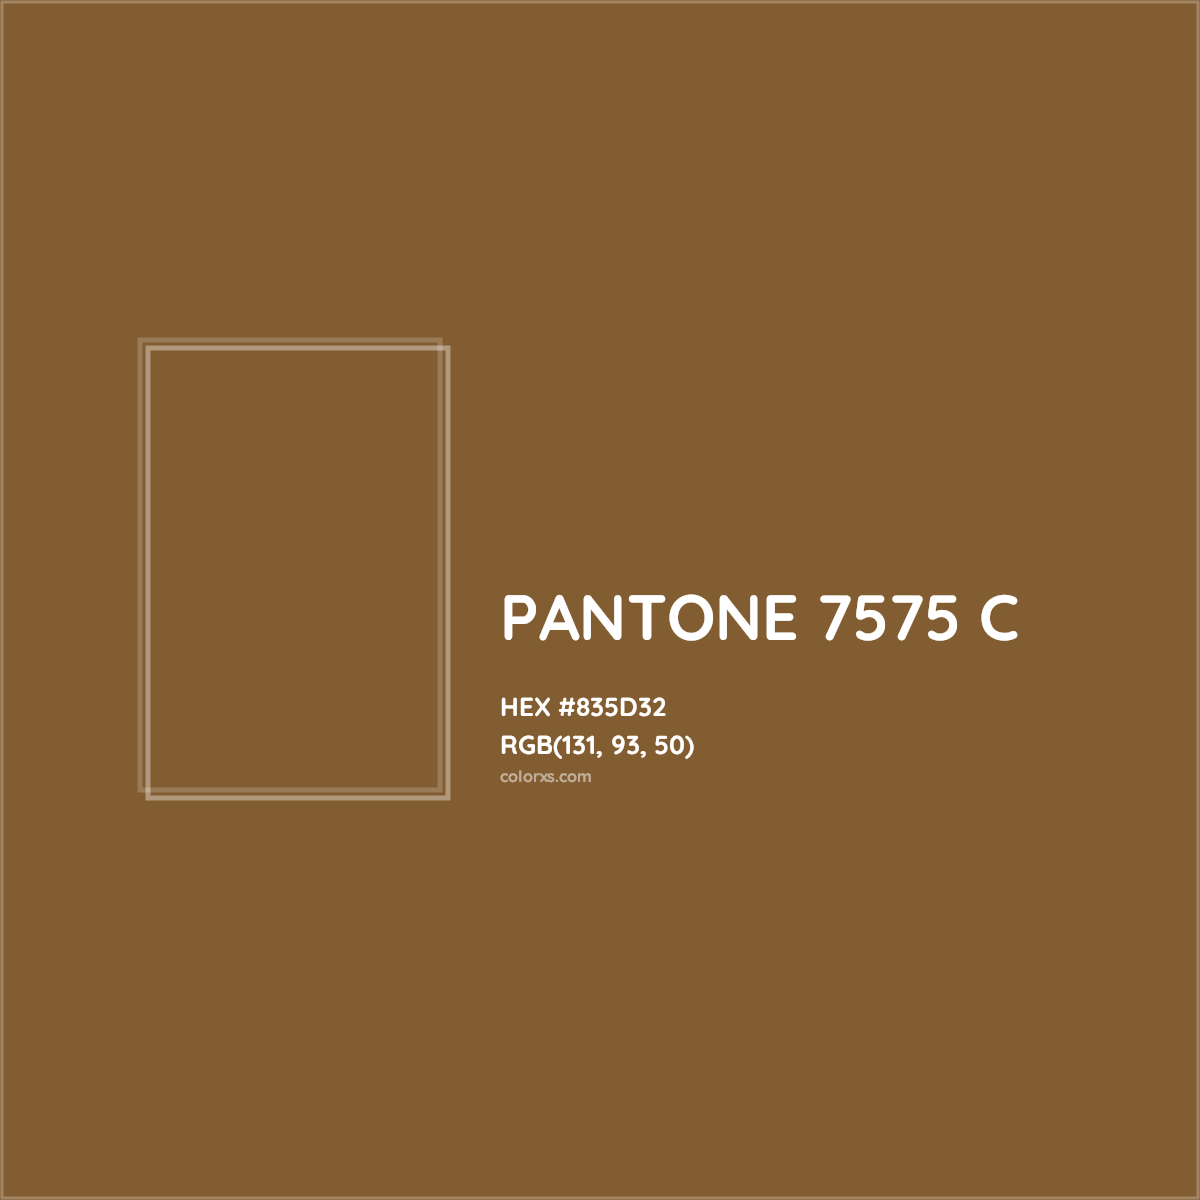 HEX #835D32 PANTONE 7575 C CMS Pantone PMS - Color Code